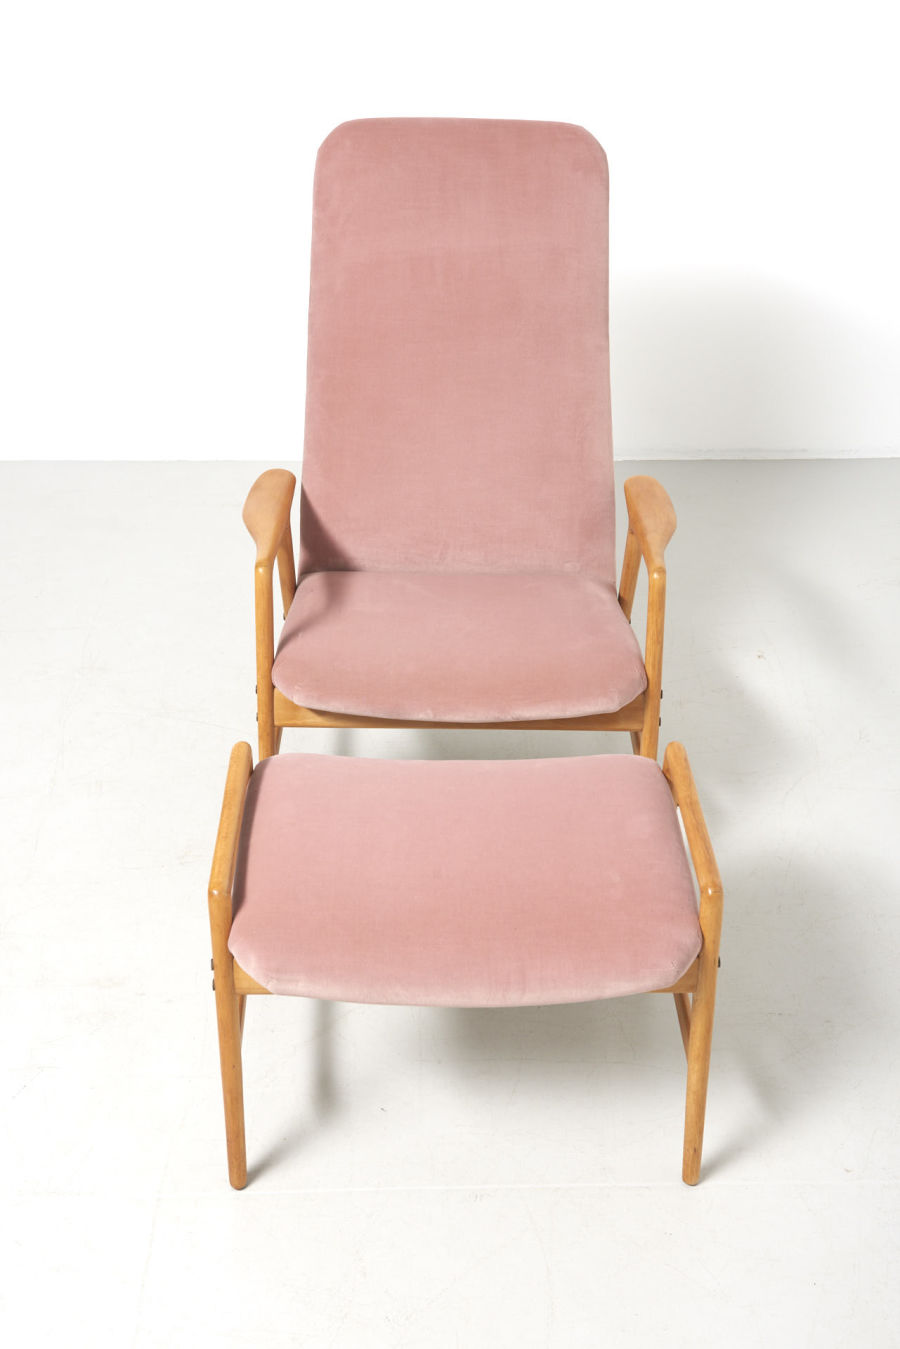 modestfurniture-vintage-1837-alf-svensson-contour-reclining-chair-ottoman02